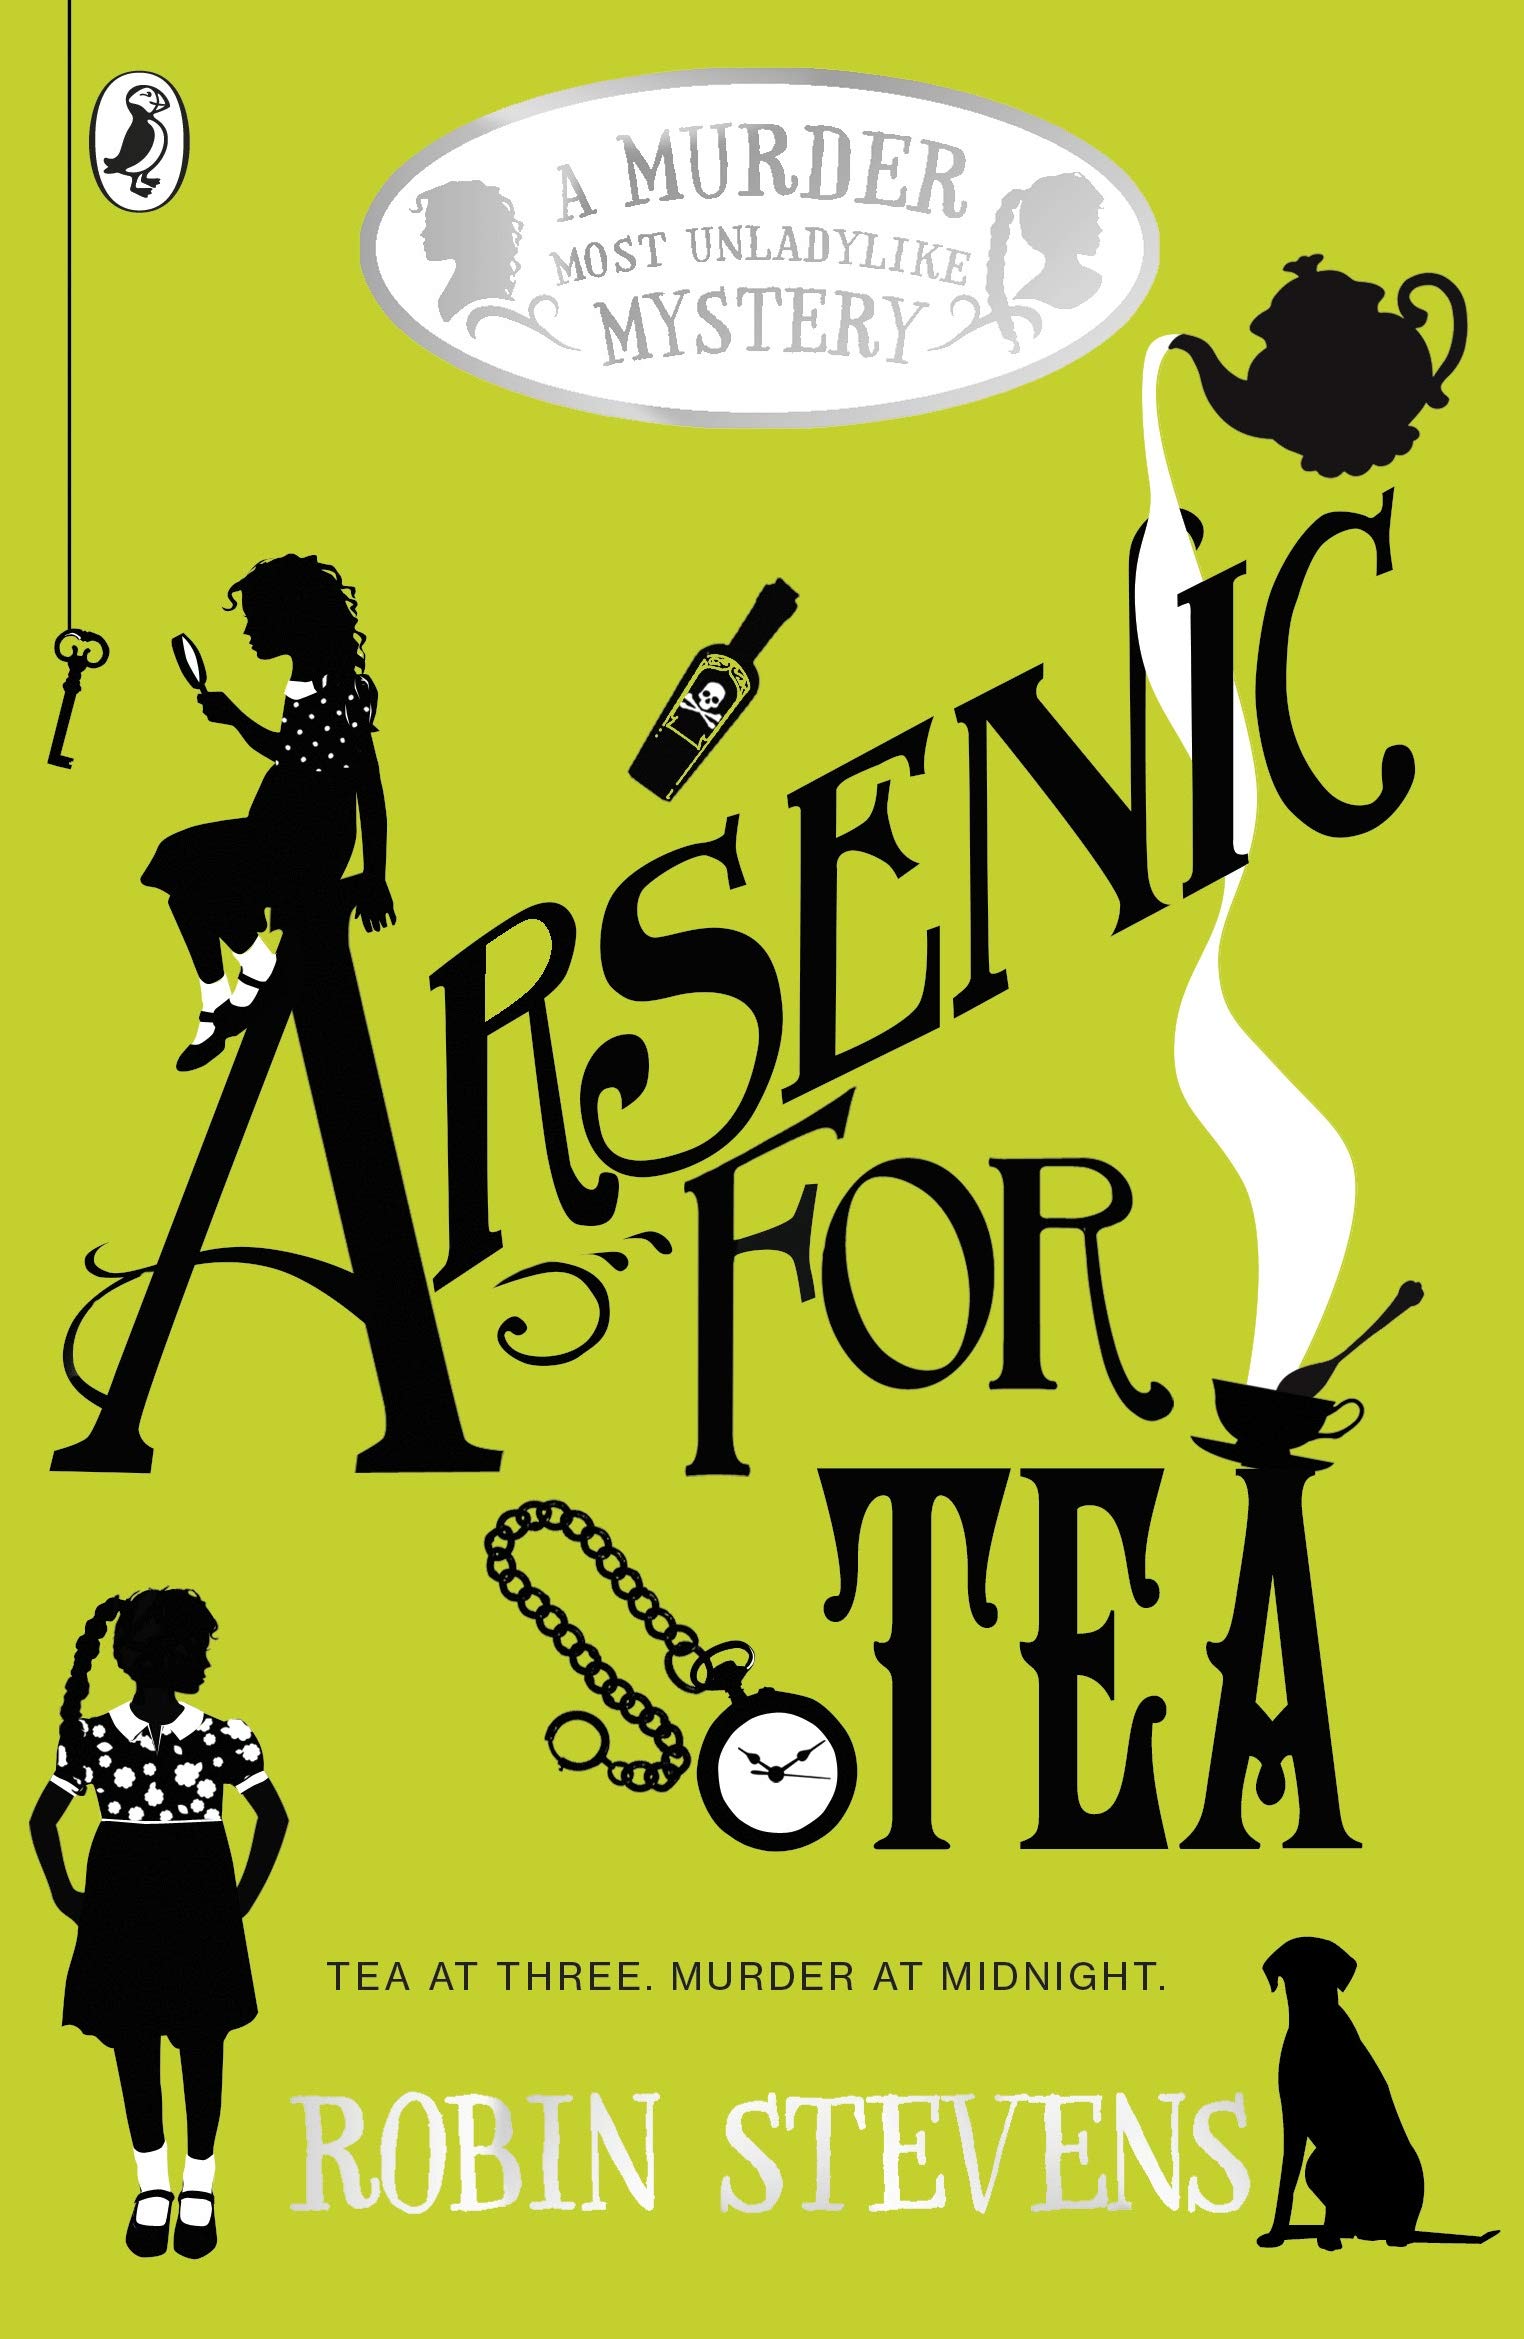 murder most unladylike arsenic for tea